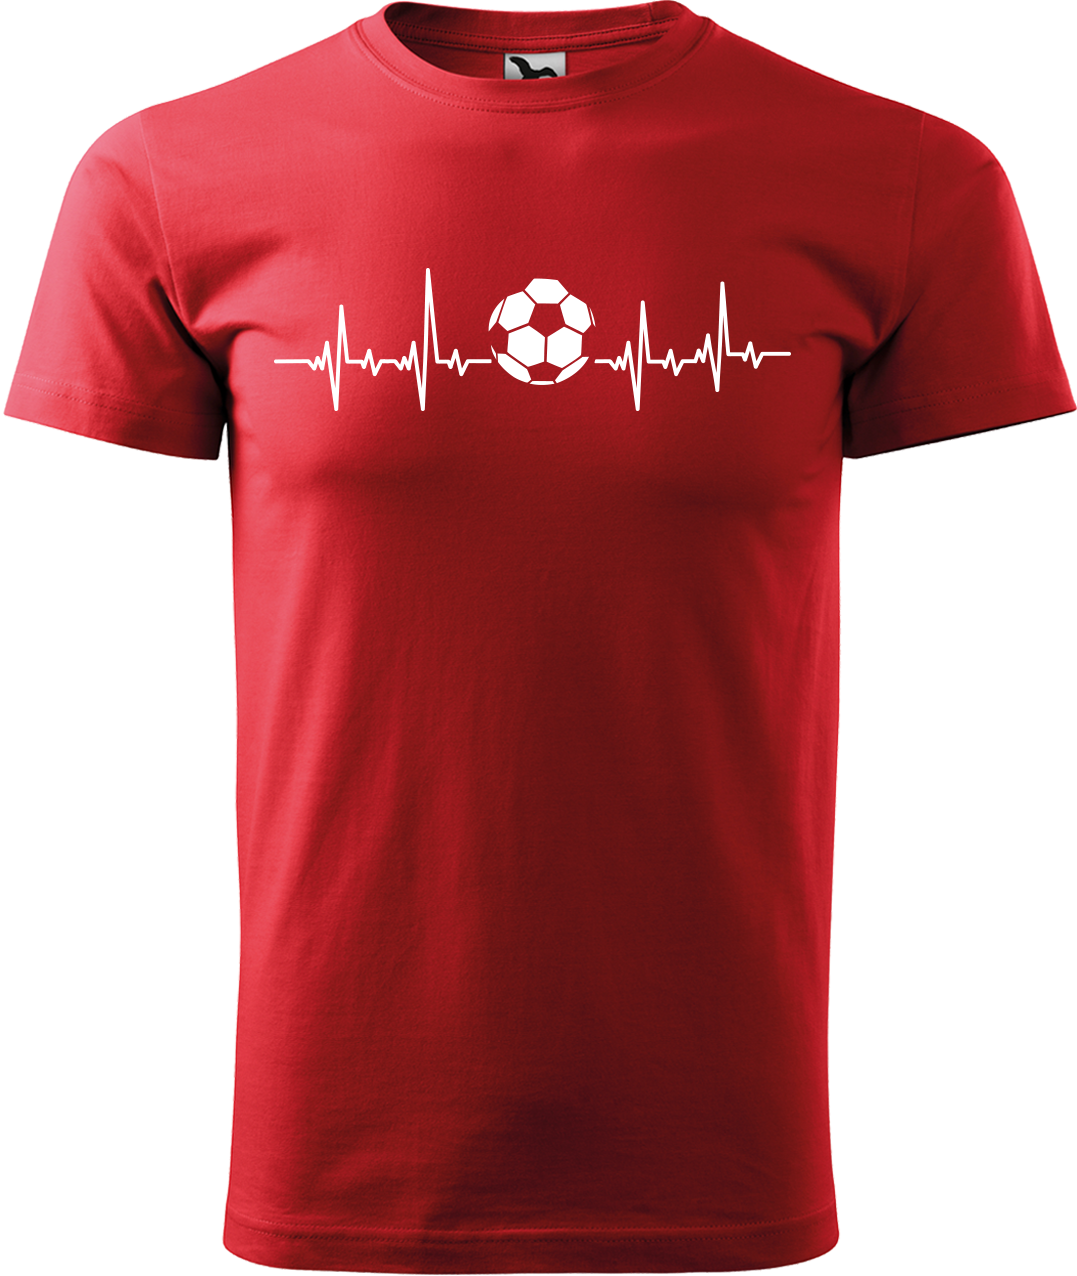 Tričko pro fotbalistu - Fotbalistův kardiogram Velikost: L, Barva: Červená (07)